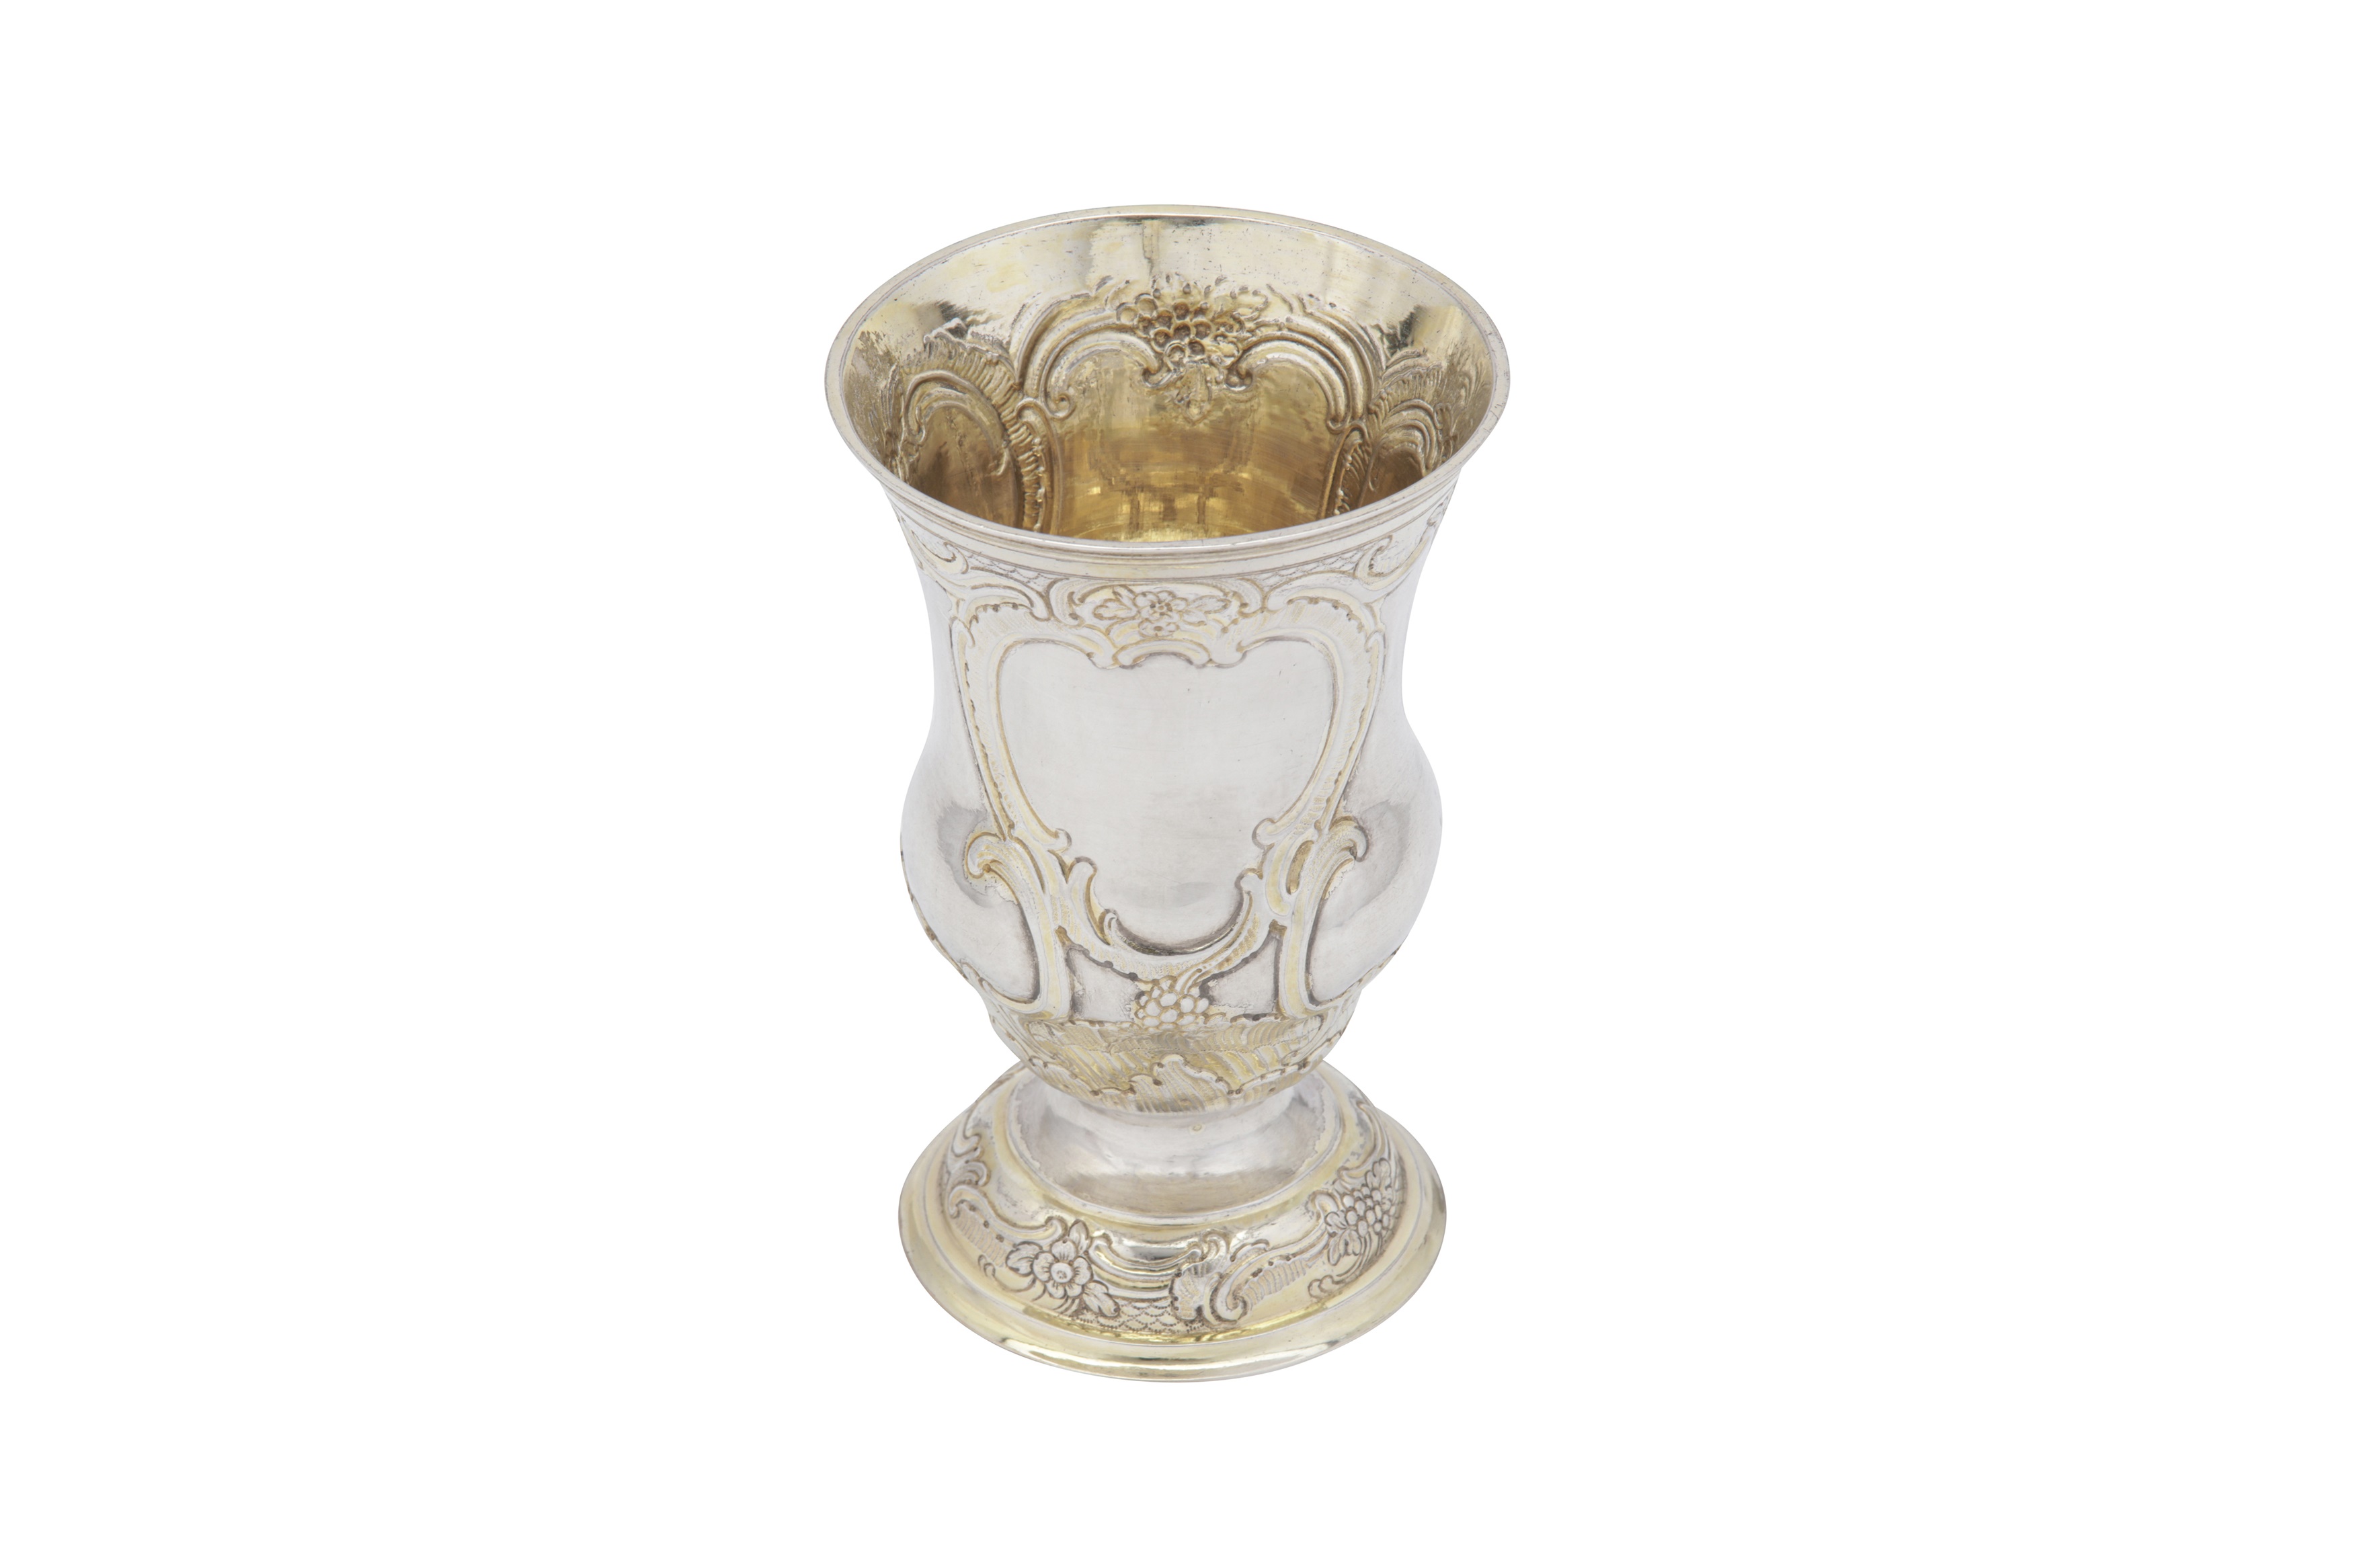 18th century silver-gilt beaker